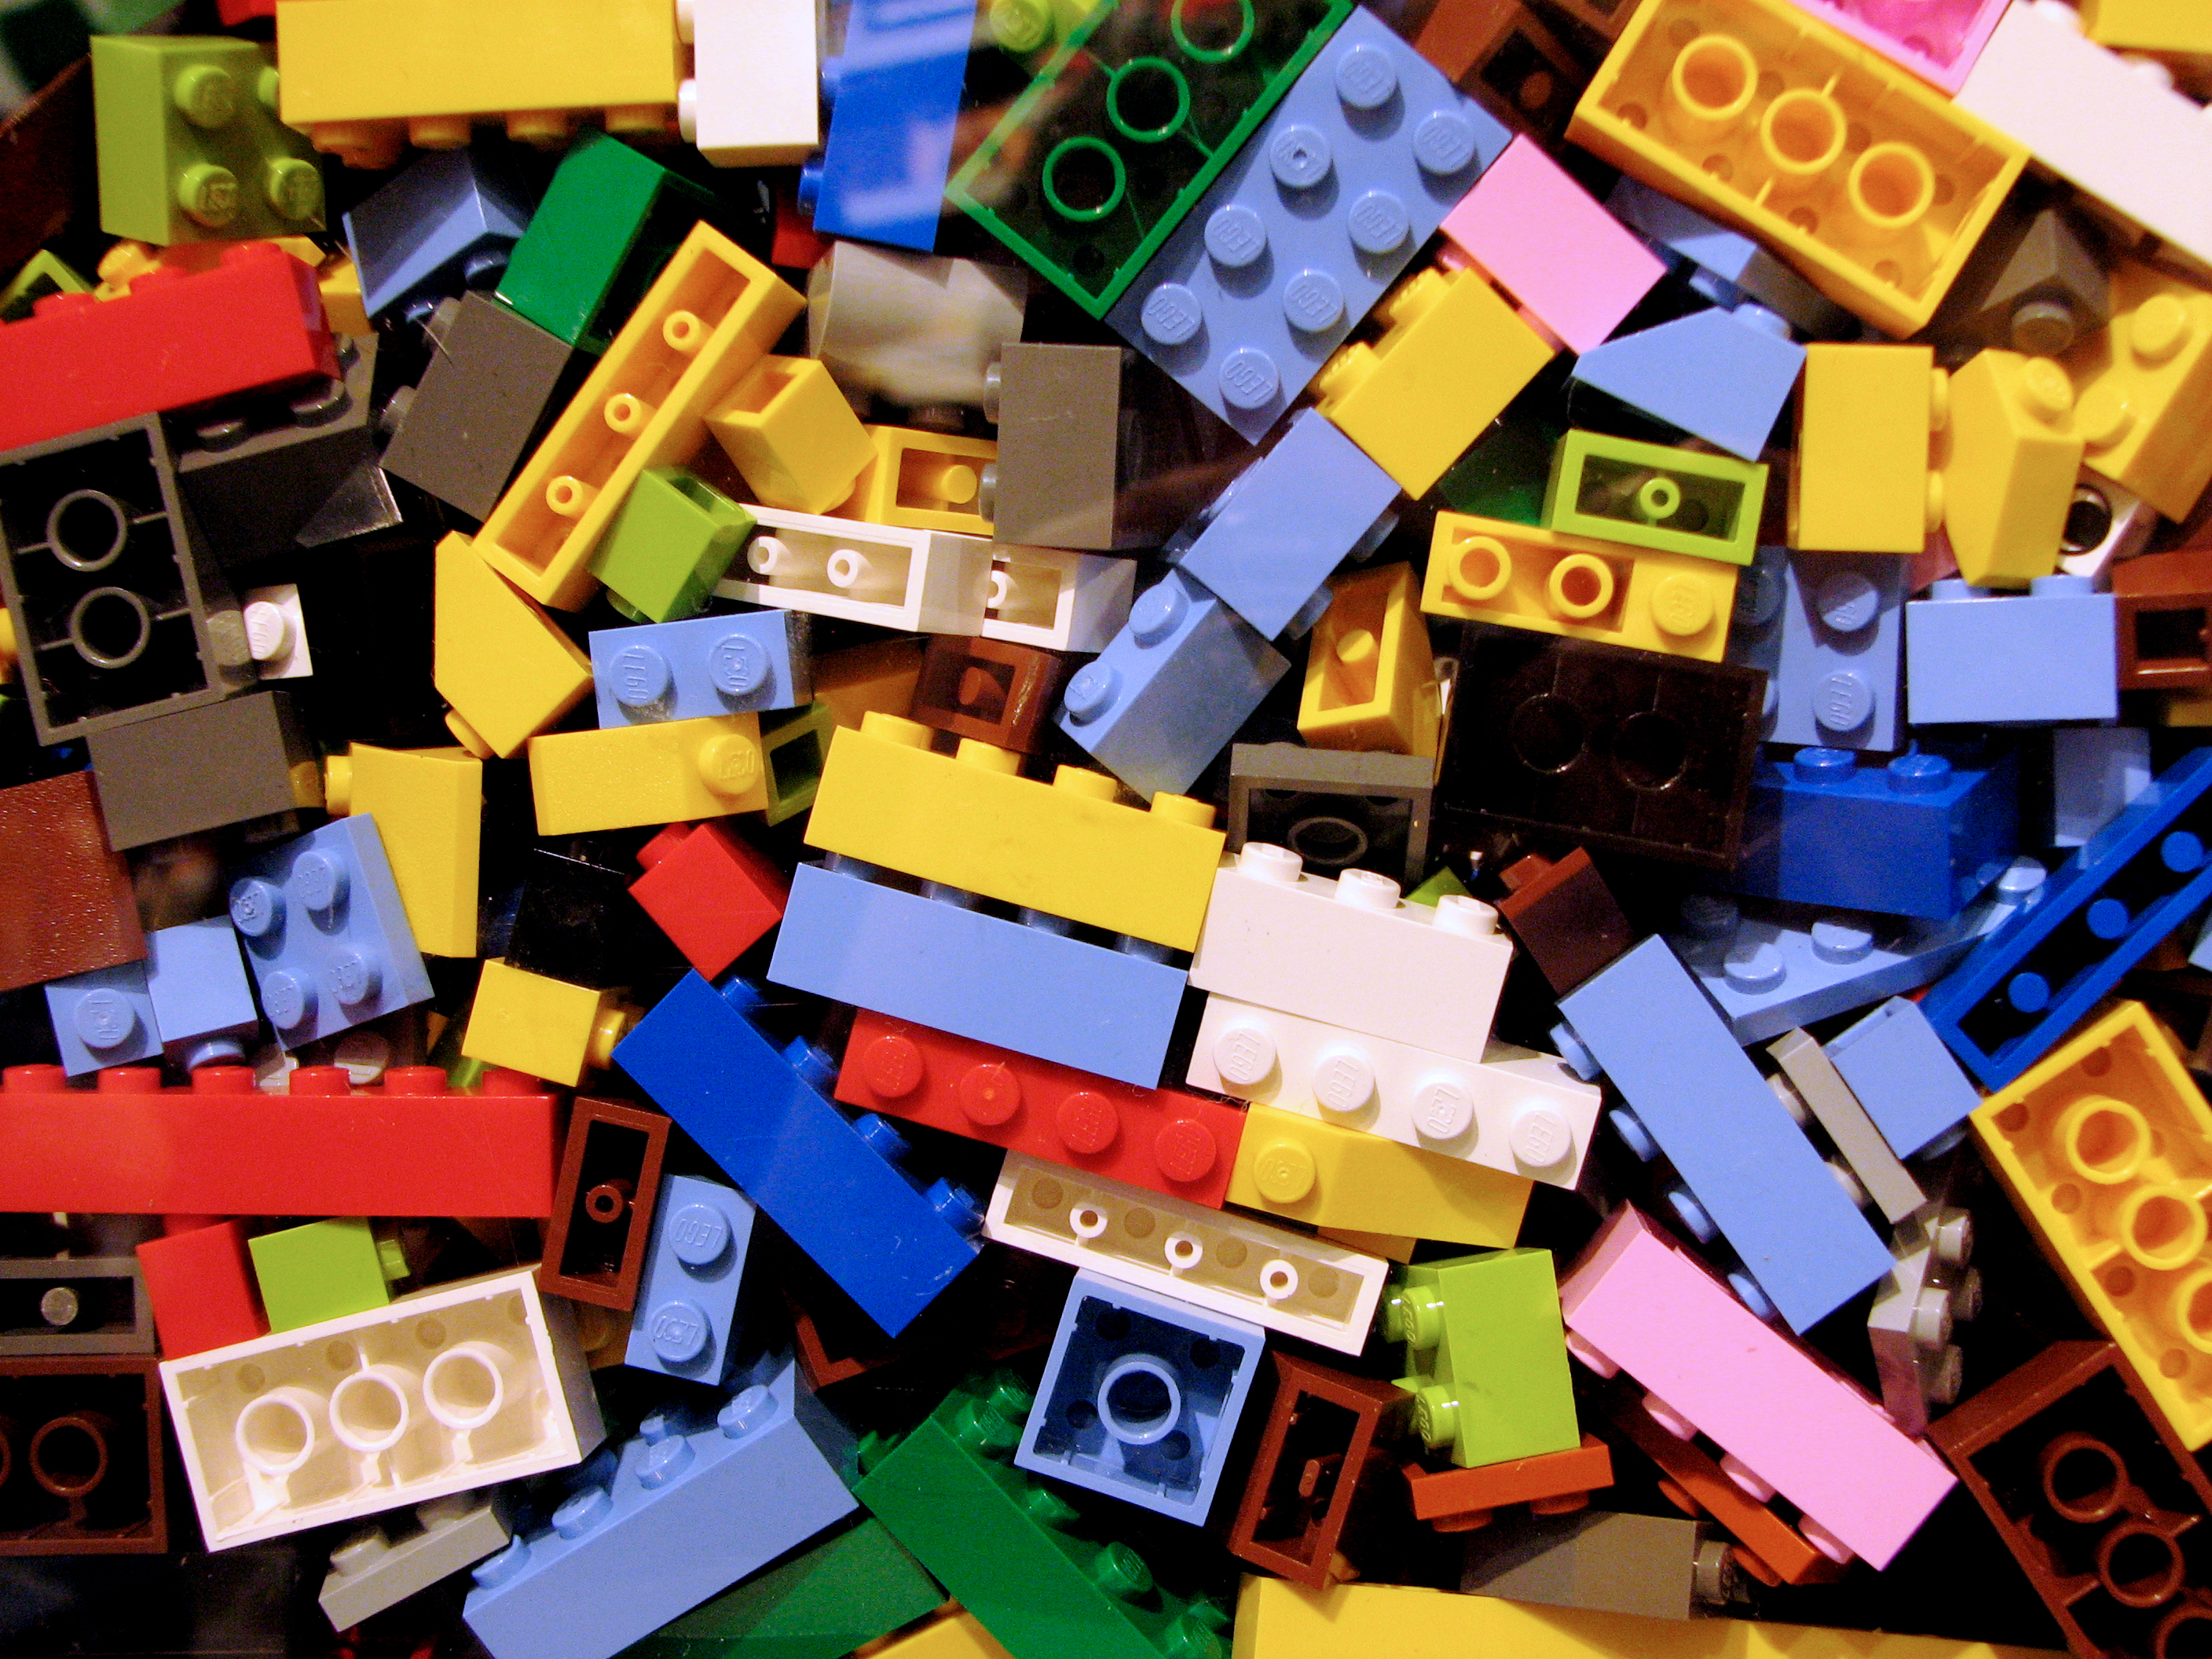 A pile of colorful LEGO blocks.